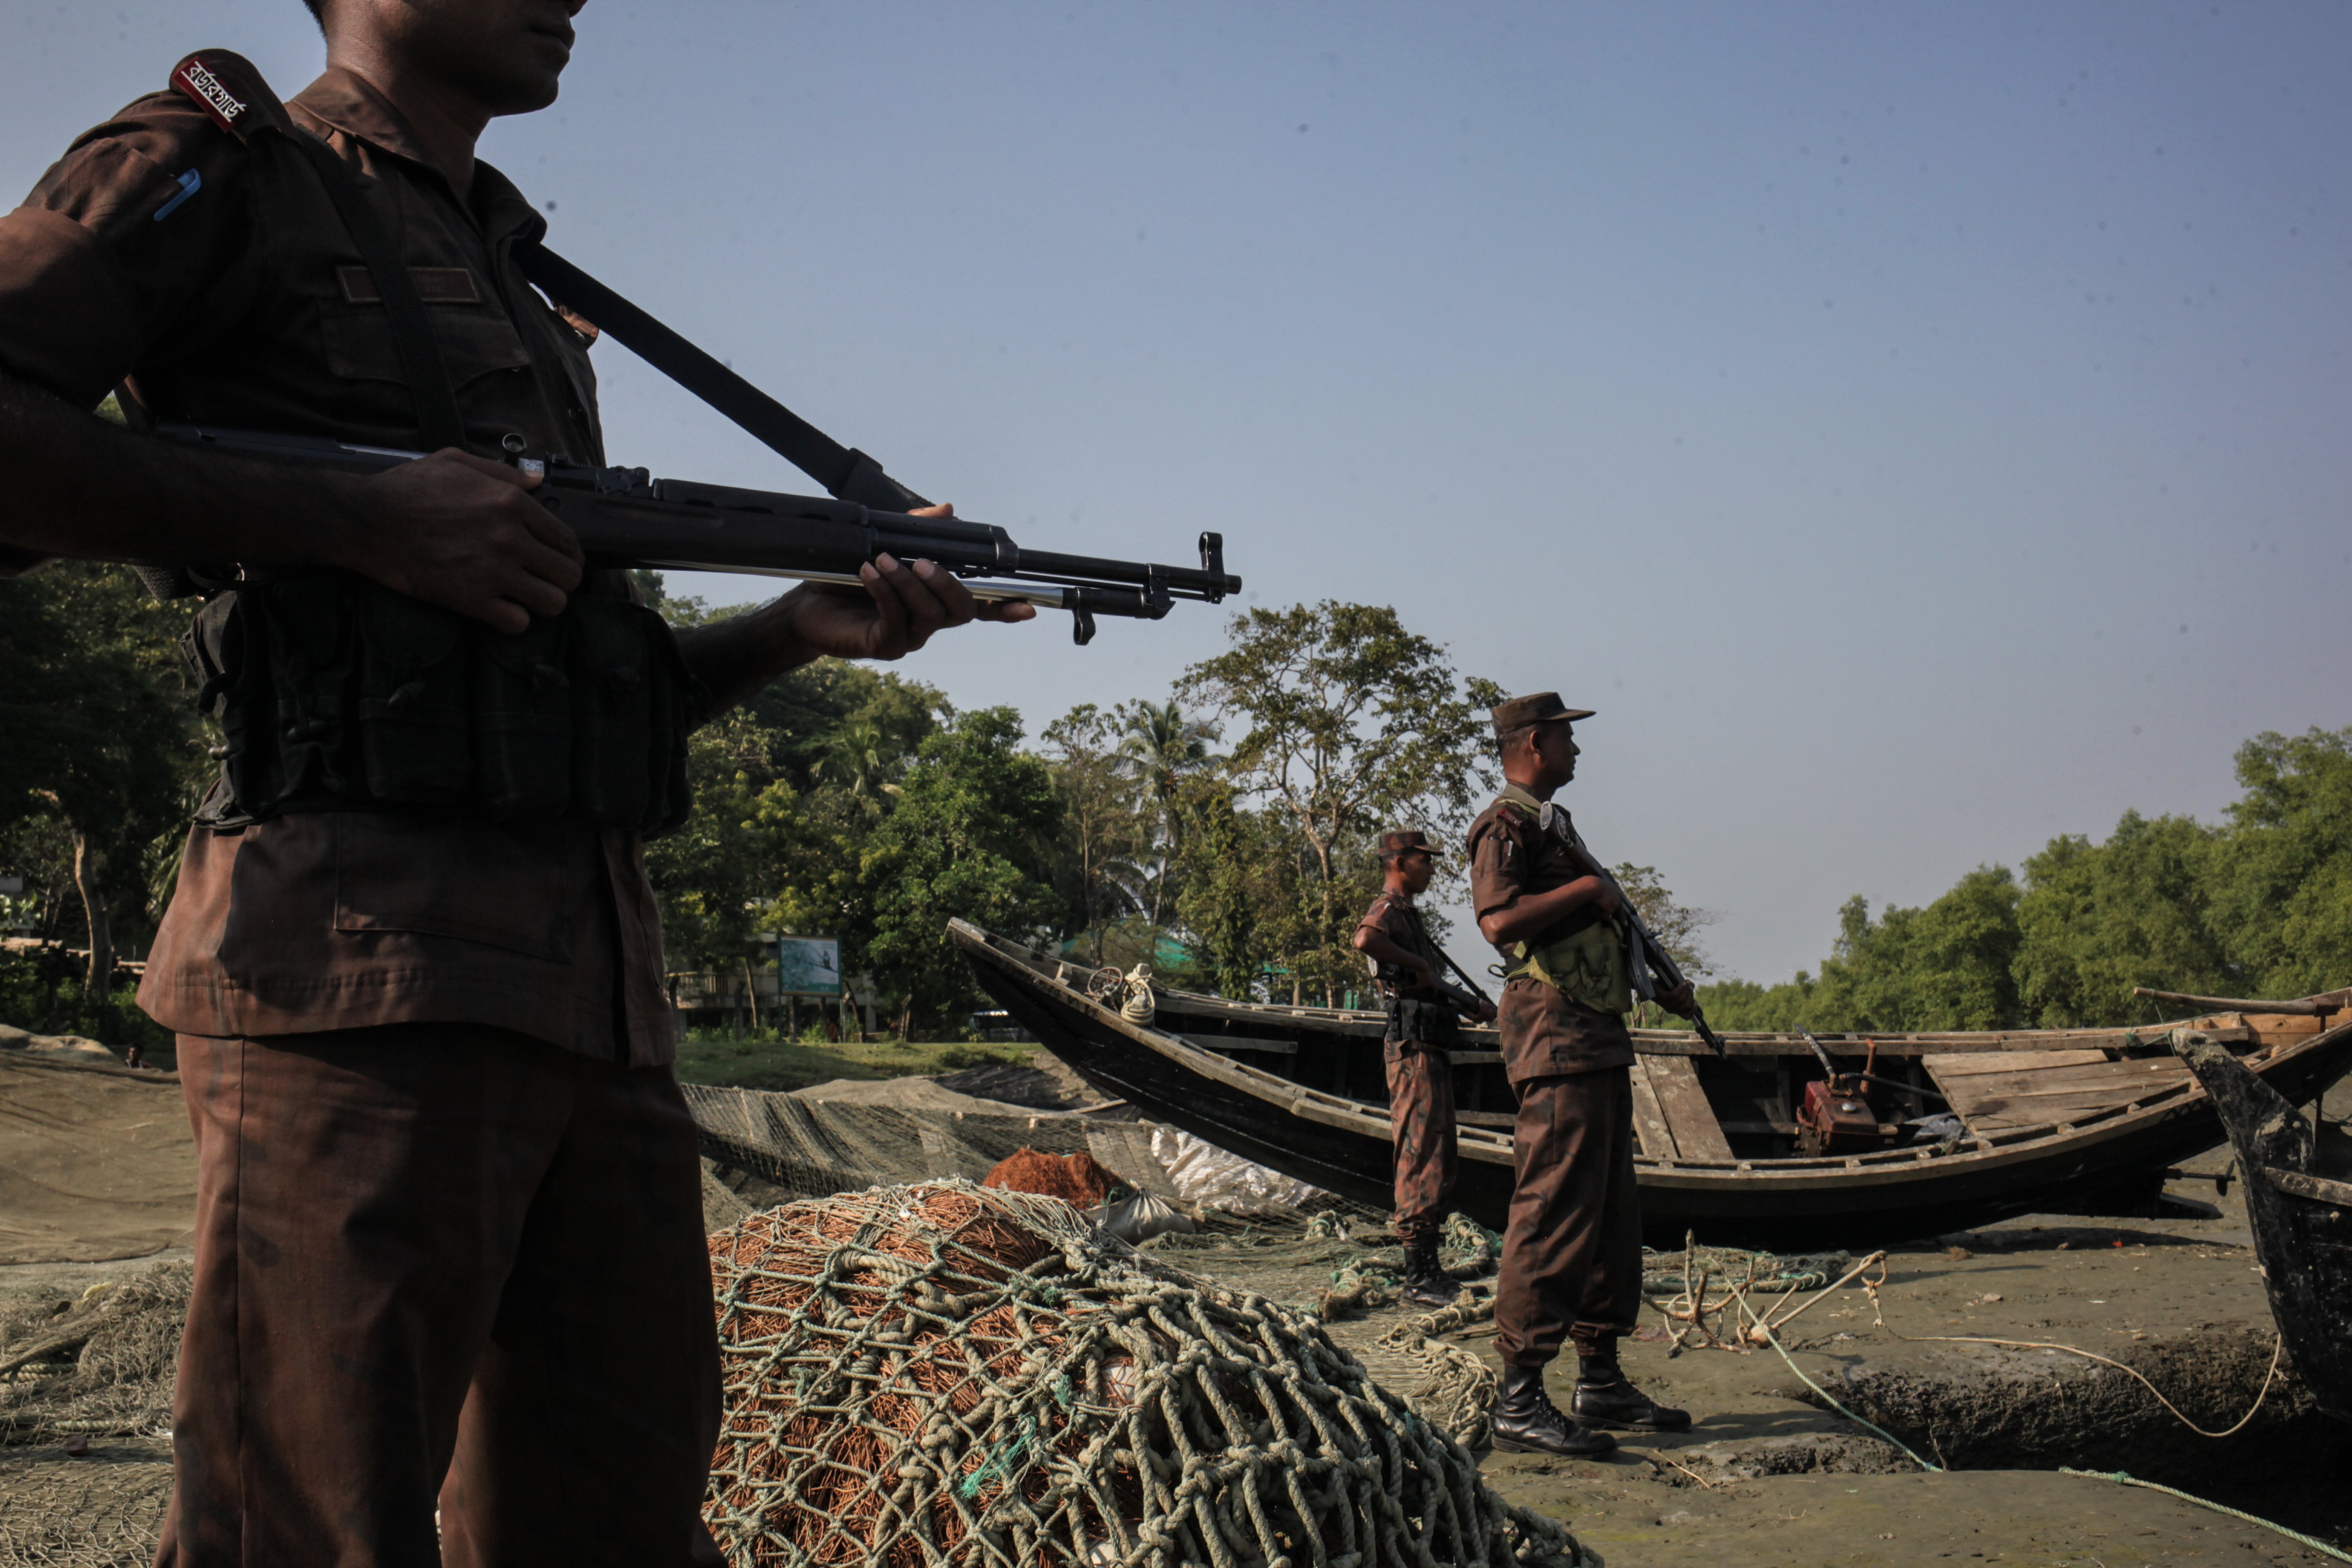 A patrol of Bangladeshi Border Guards attempts to prevent Rohingya refugees from crossing into Bangladesh from Burma, on the banks of the Naf River, near Cox's Bazar, Bangladesh, on Nov. 22, 2016 (Anik Rahman/NurPhoto/Sipa USA)